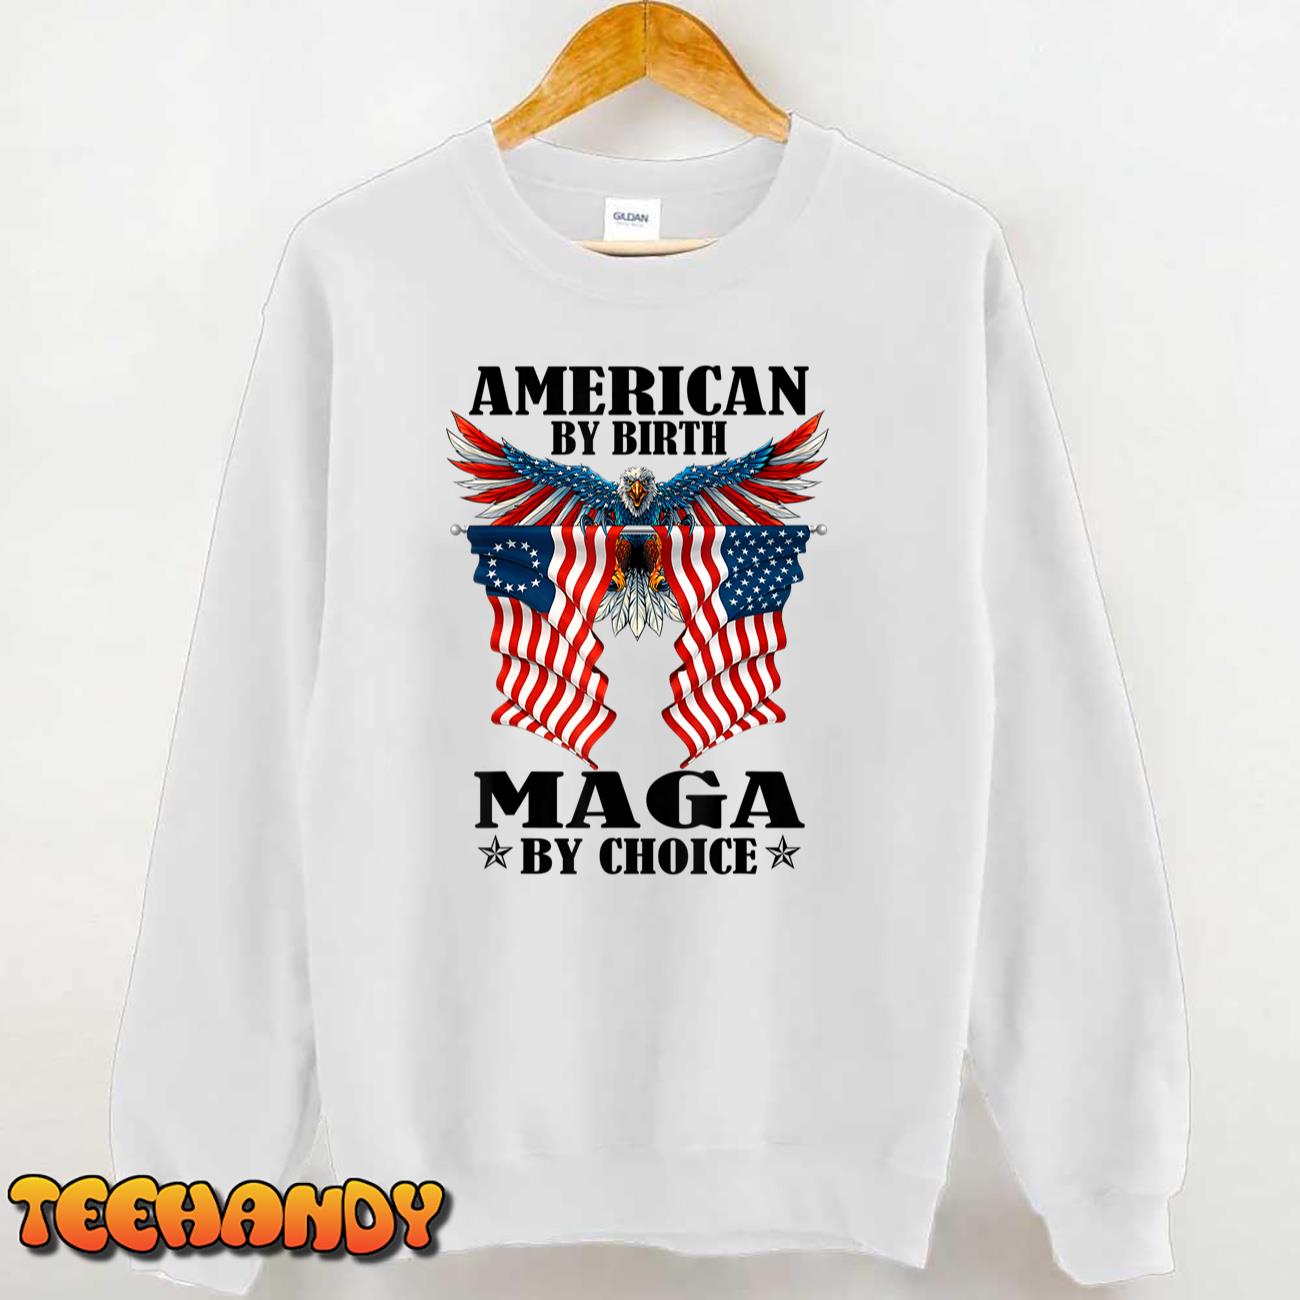 American By Birth Maga With Choice T-Shirt